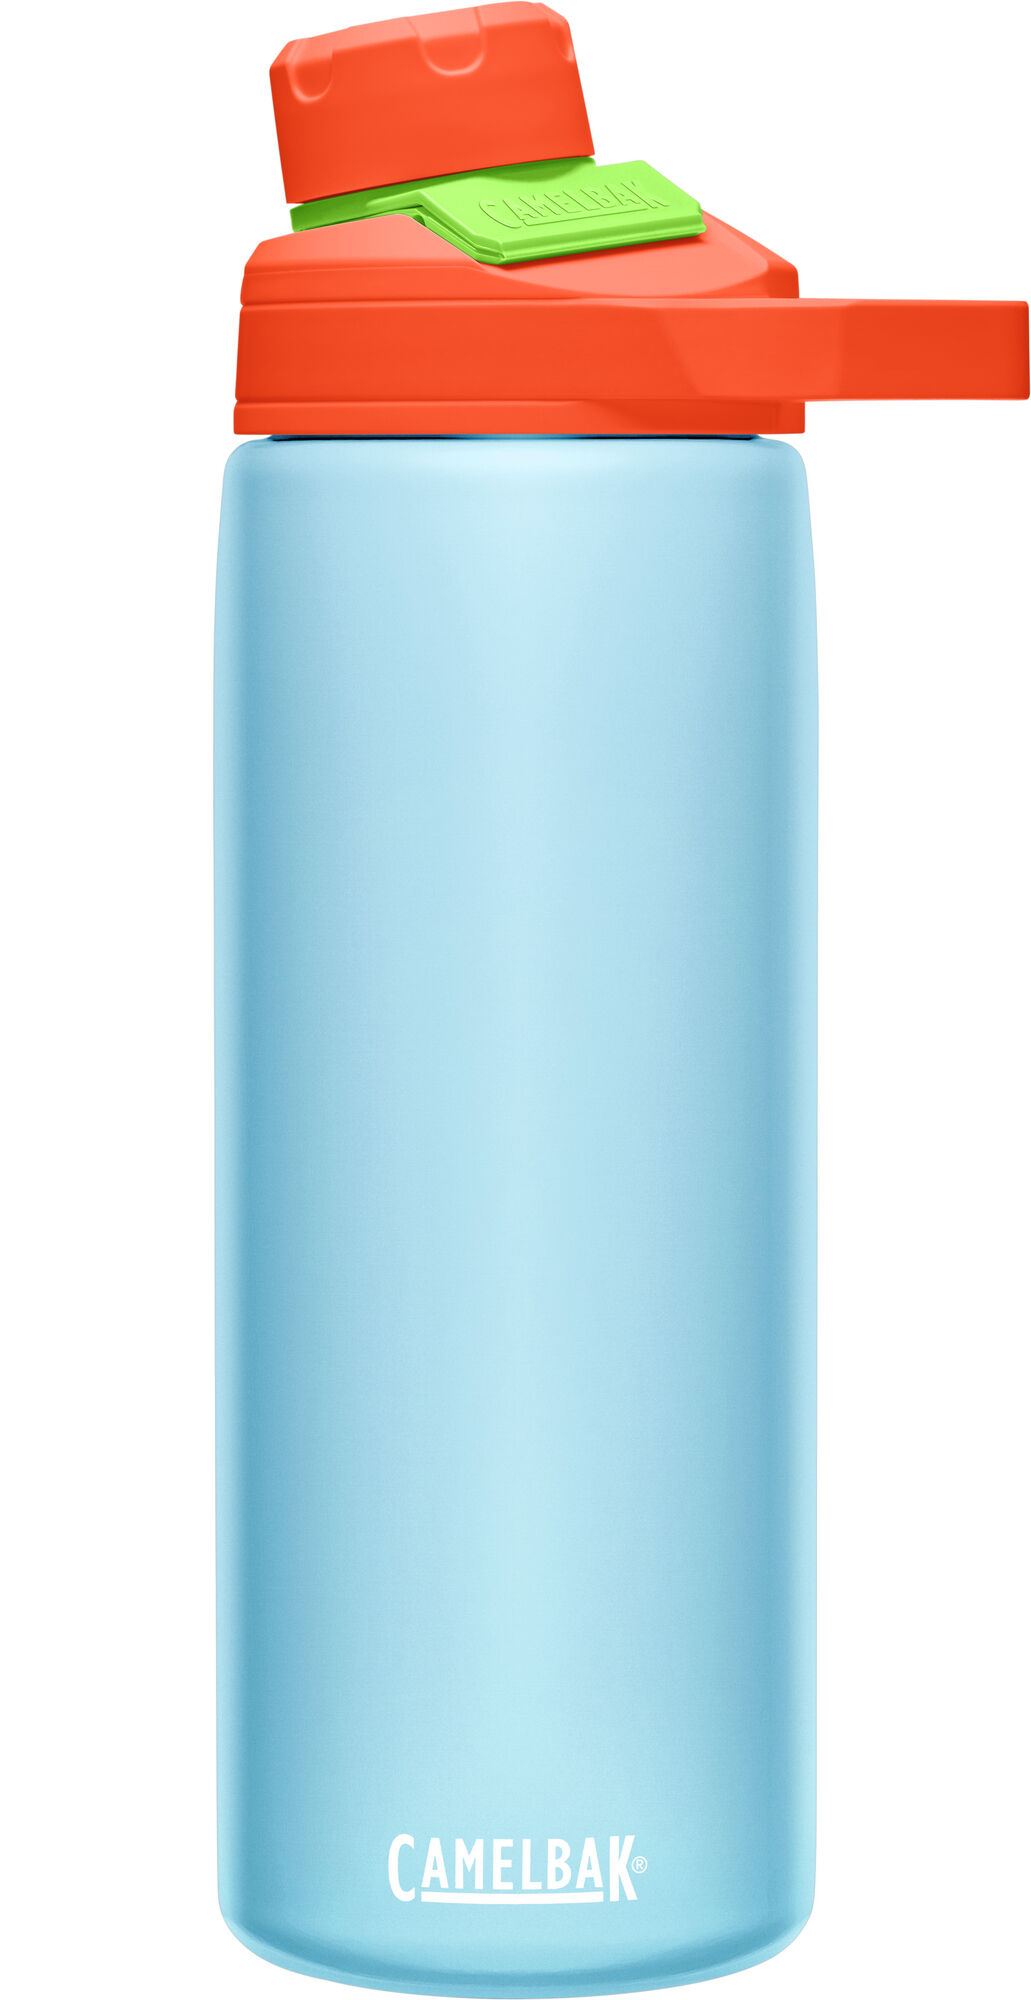 New-Free Shipping Blue & LightGray CamelBak Chute Water Bottle Replacement Cap 